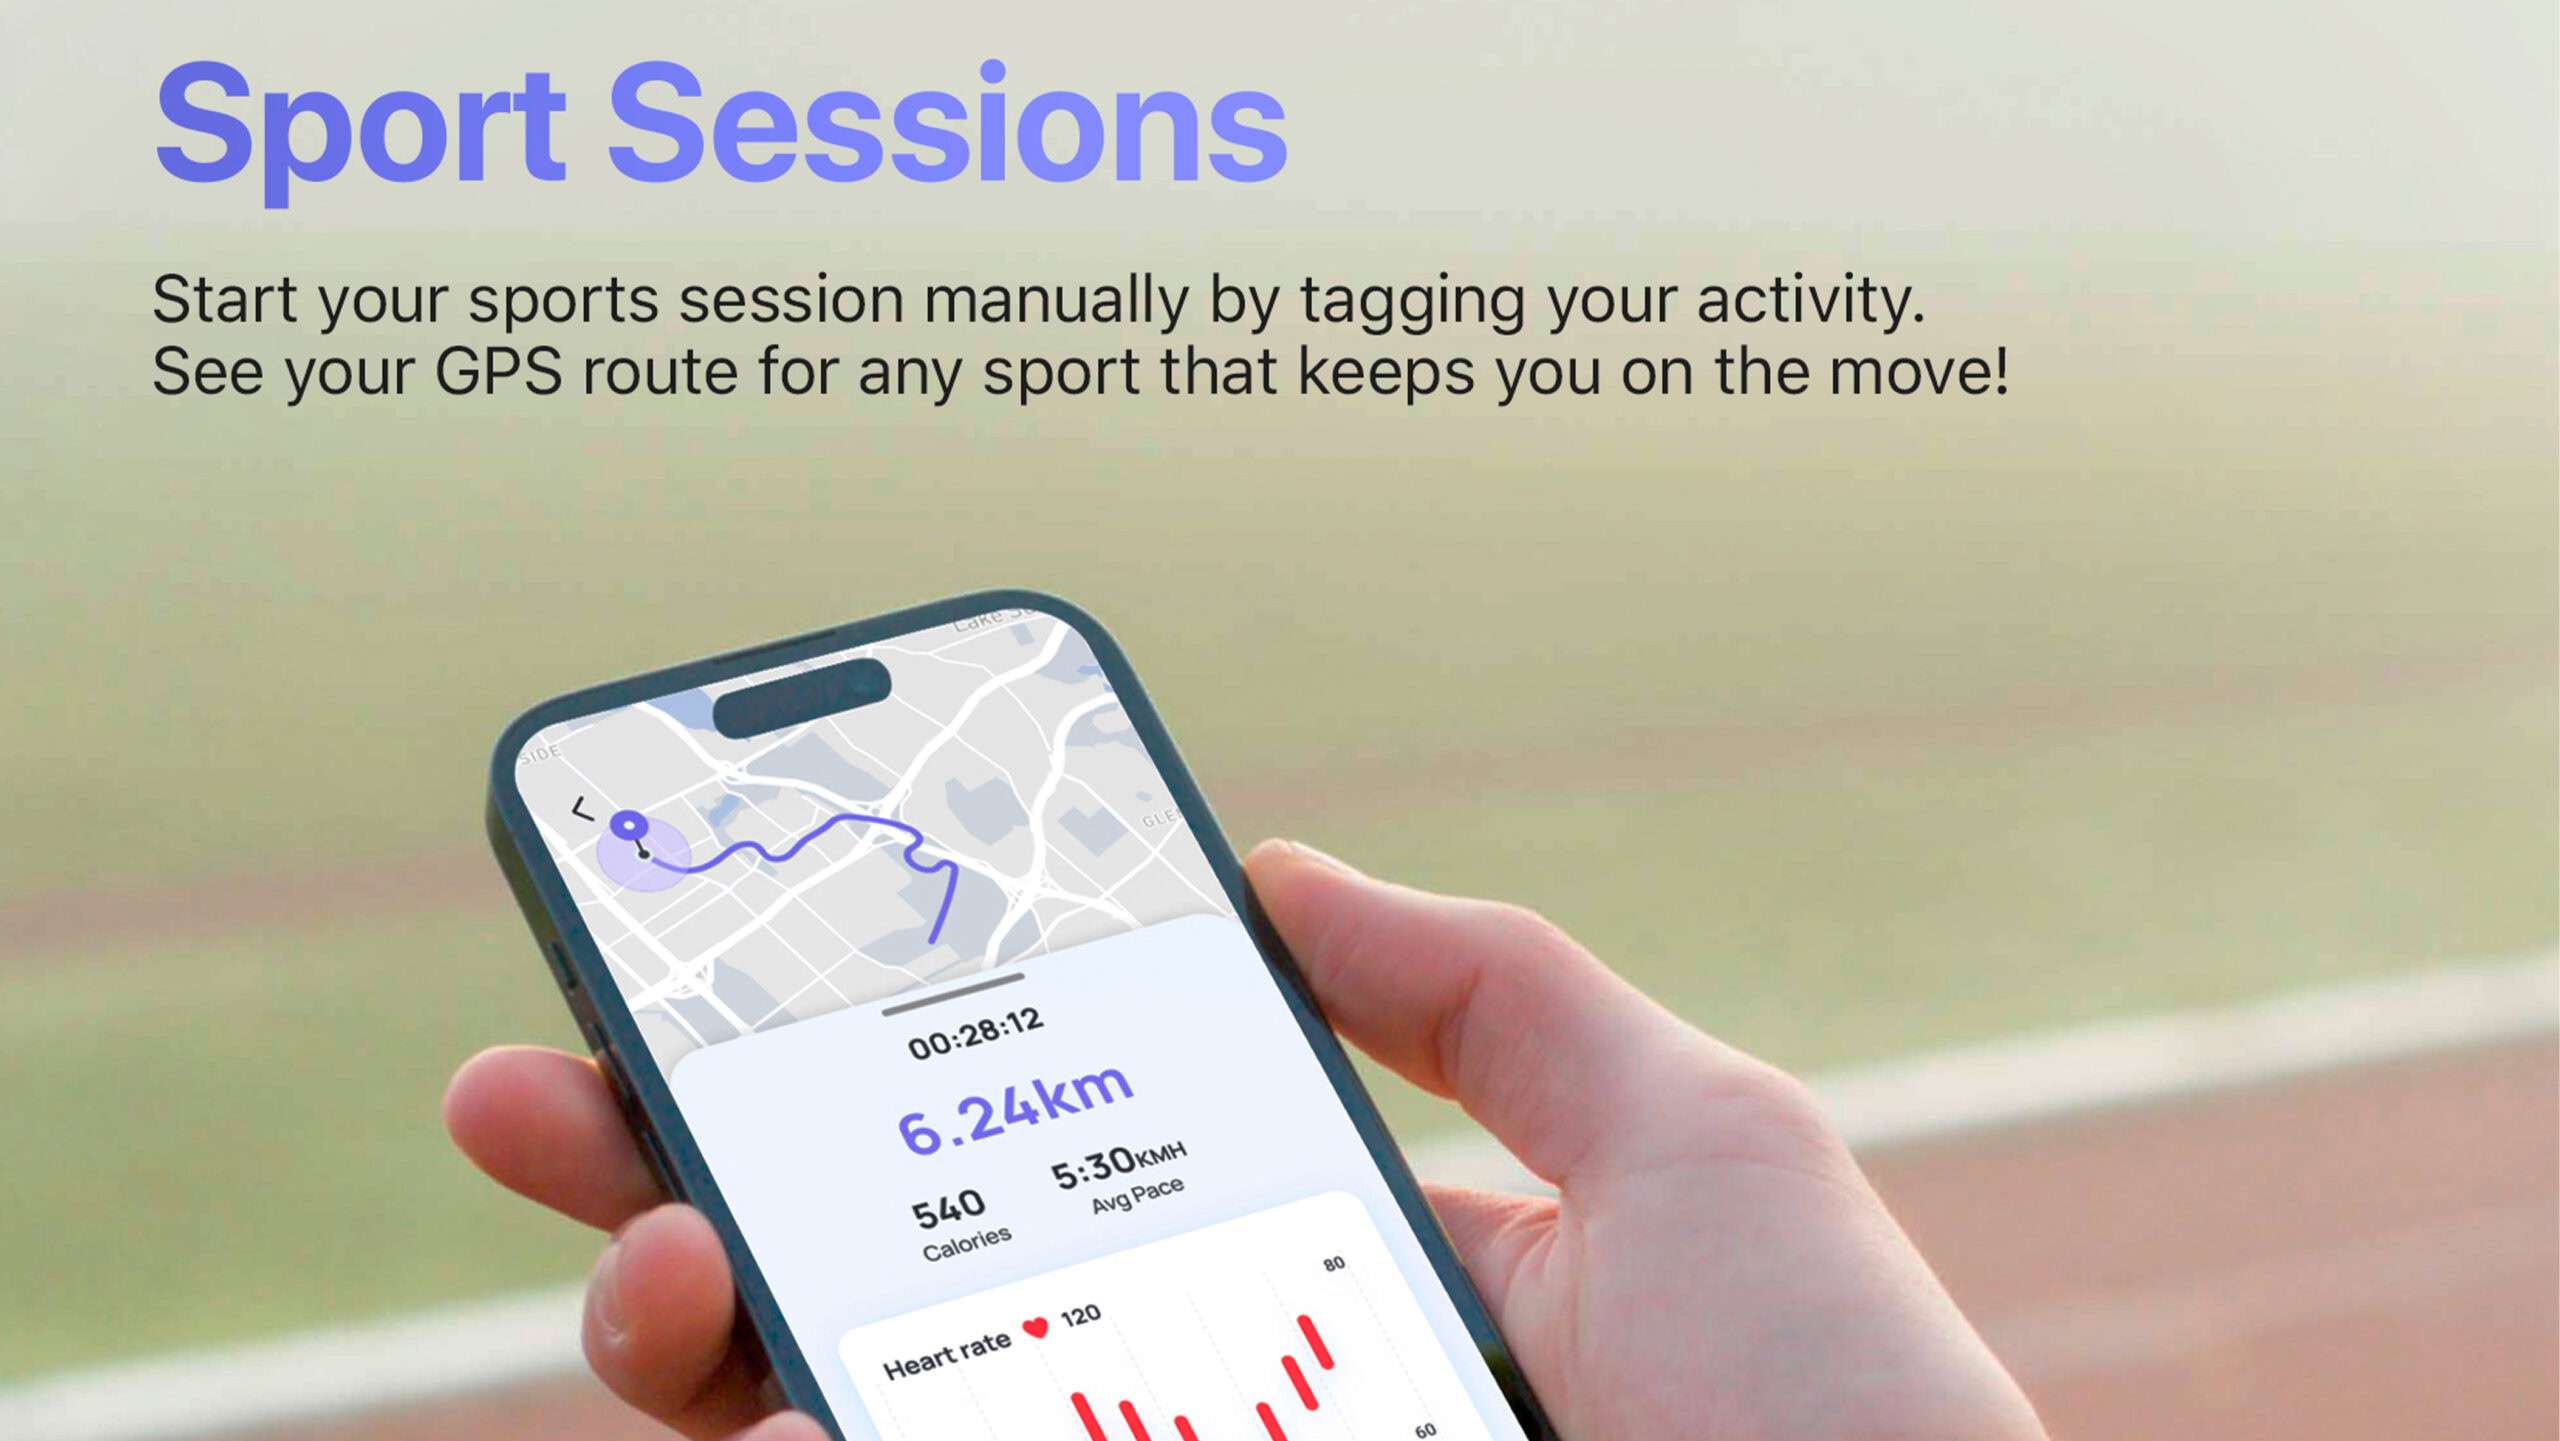 The Circular Kira+ App displays a user's Sport Session data.